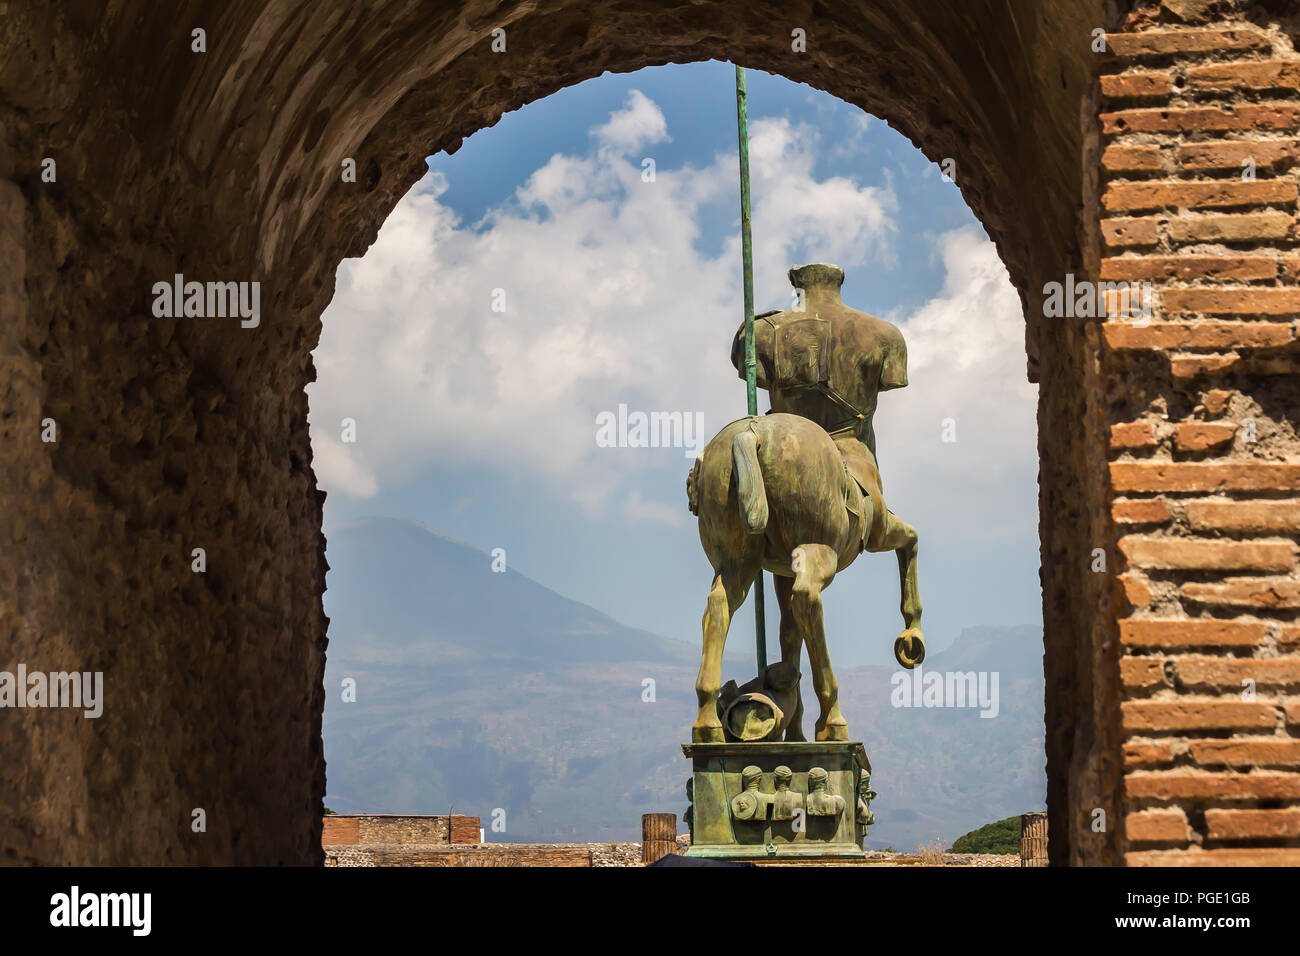 Pompei, near Naples, Italy - June 1, 2018 - Statue 'Centauro' by modern Polish artist Igor Mitoraj, overlooking ruins of Pompei Stock Photo